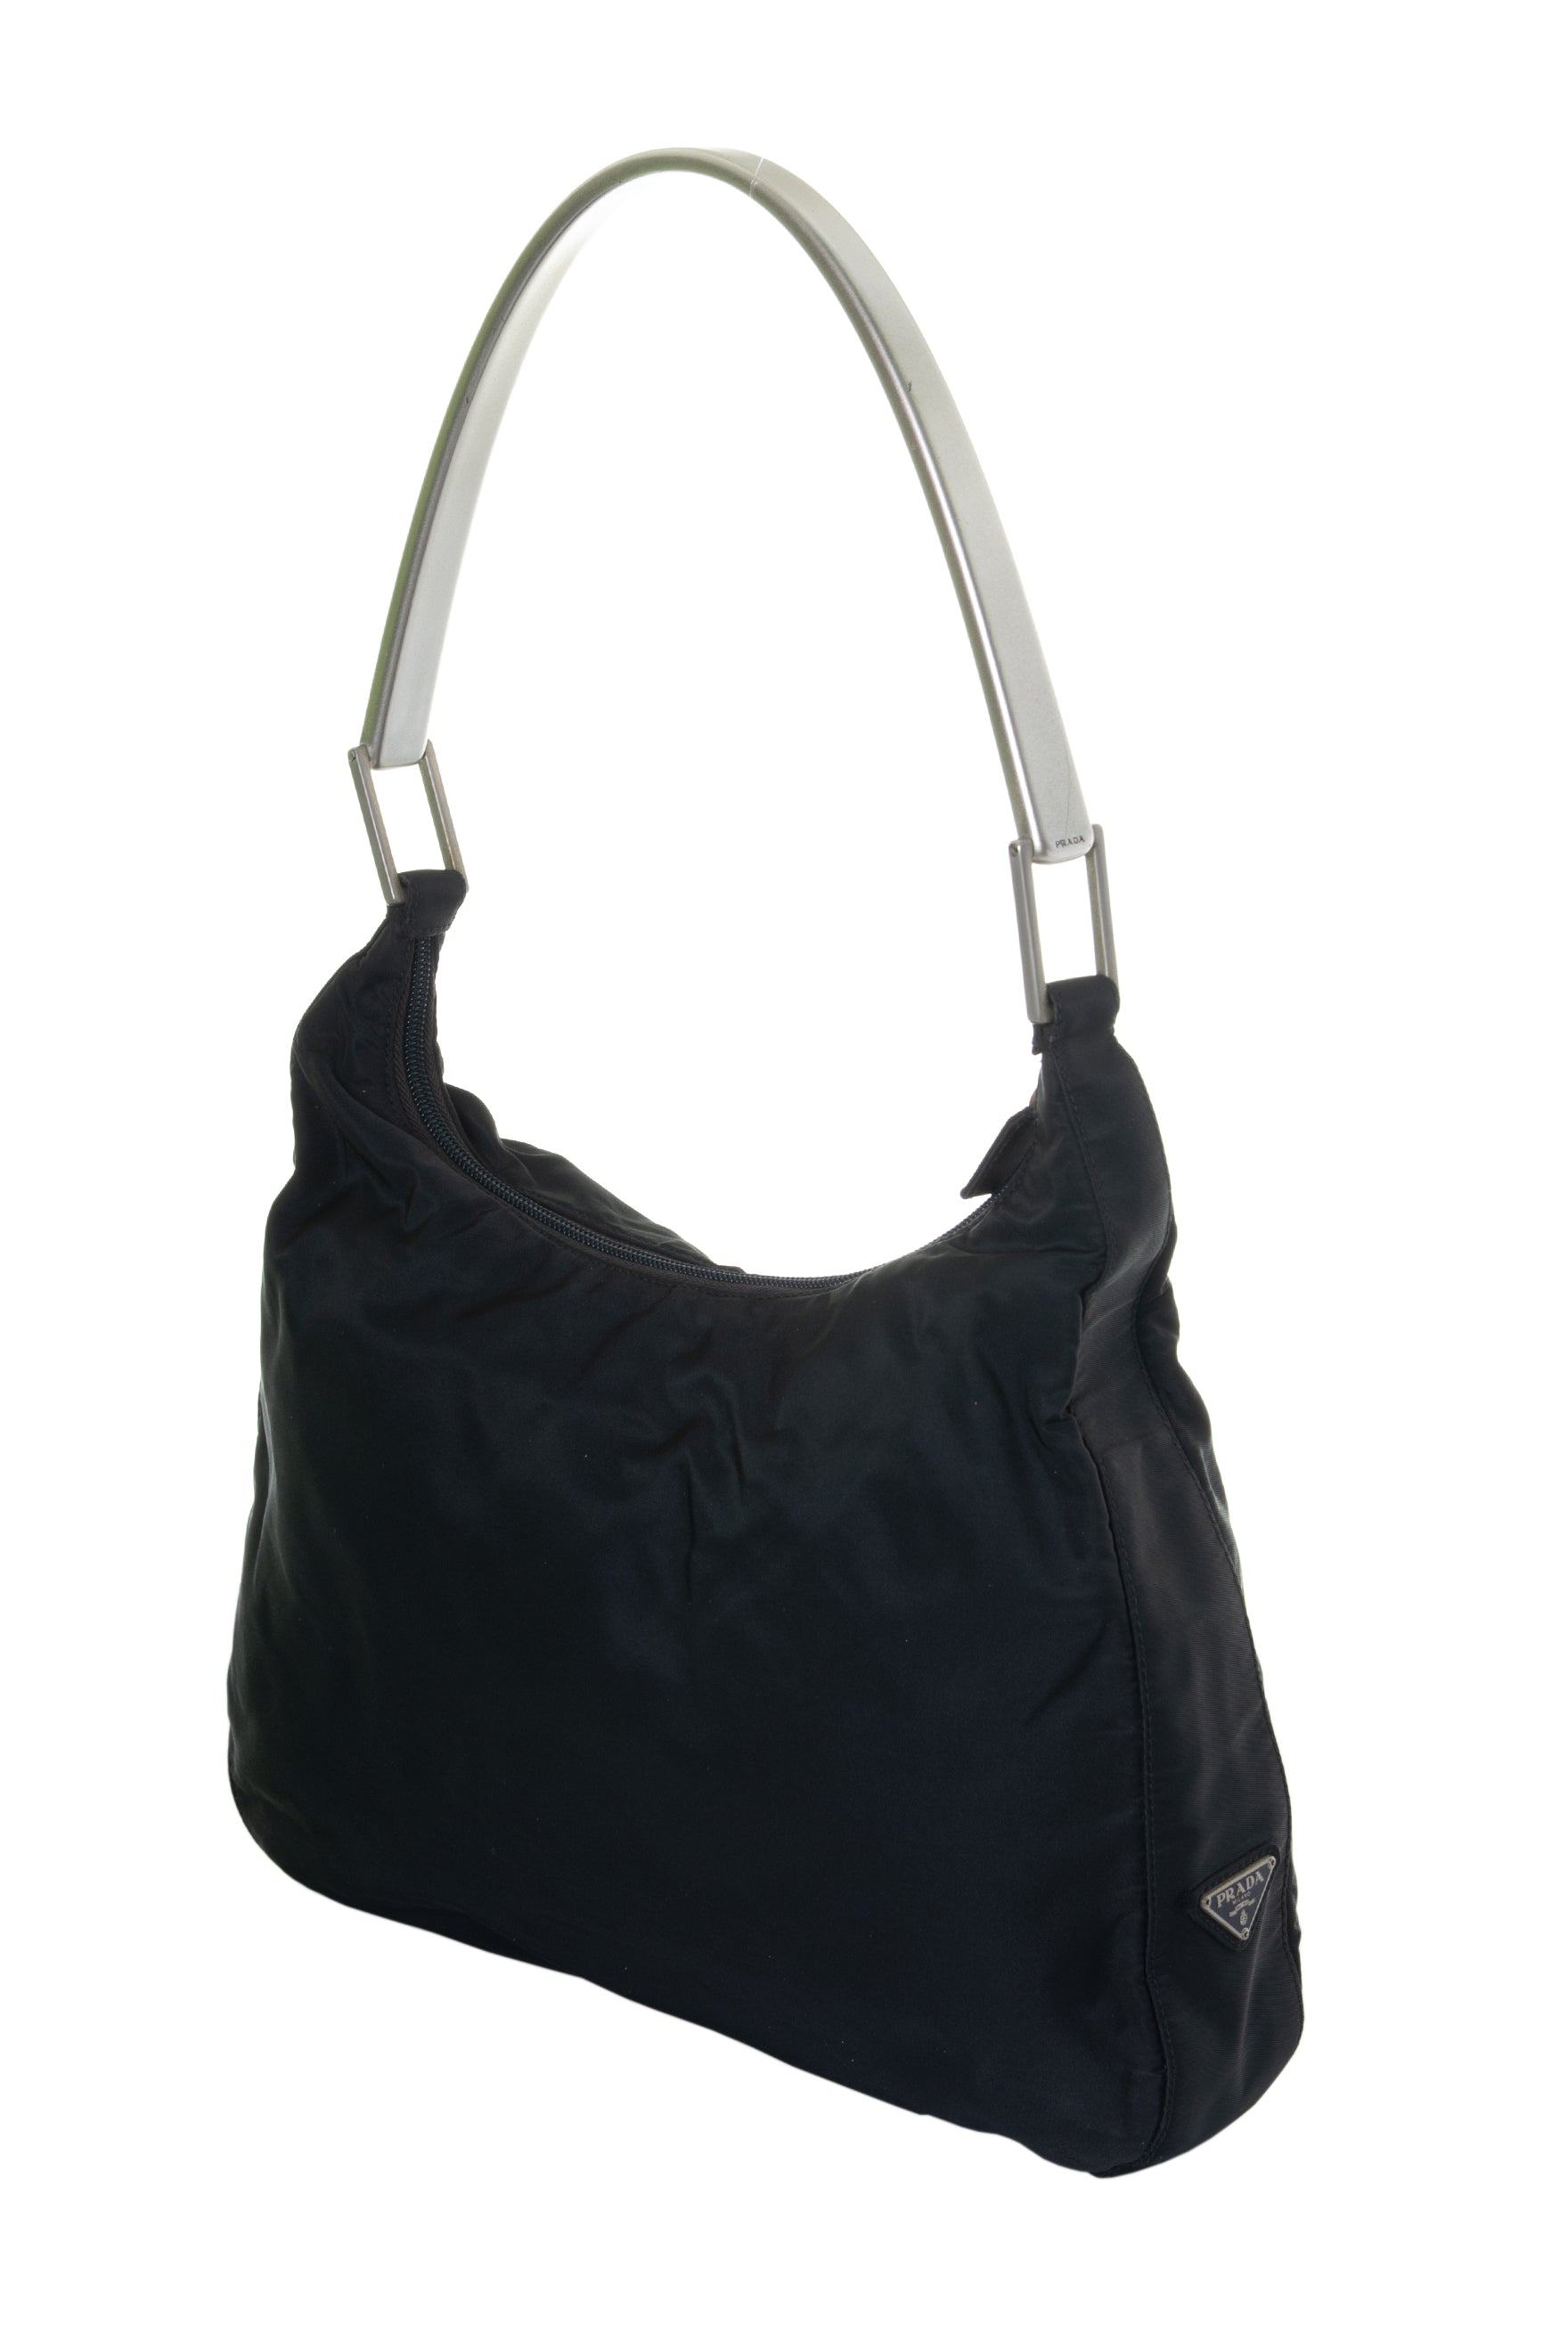 Prada Vintage Metal Handle Bag - Shoulder Bags, Handbags